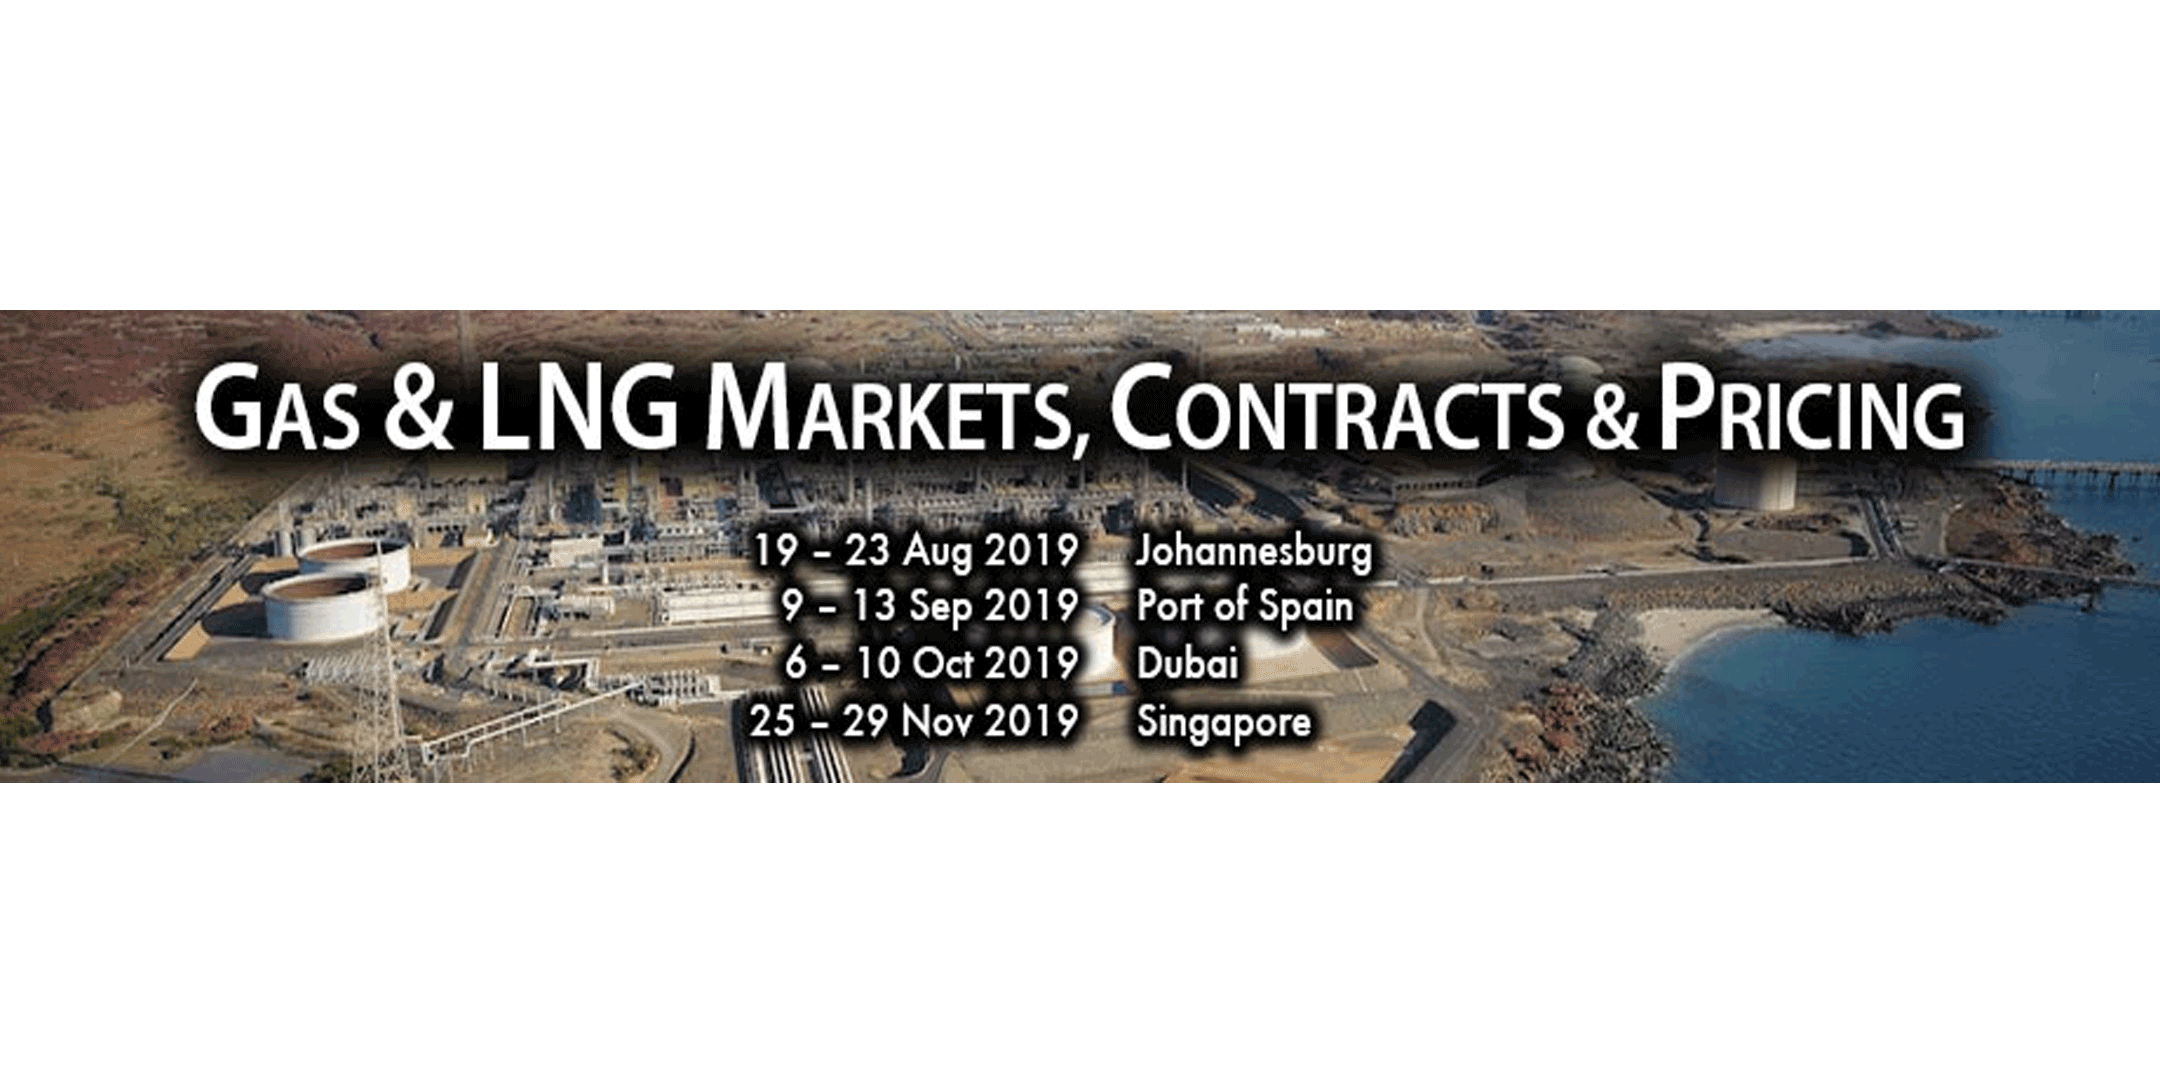 Gas & LNG Markets, Contracts & Pricing - Johannesburg, Johannesburg, Gauteng, South Africa